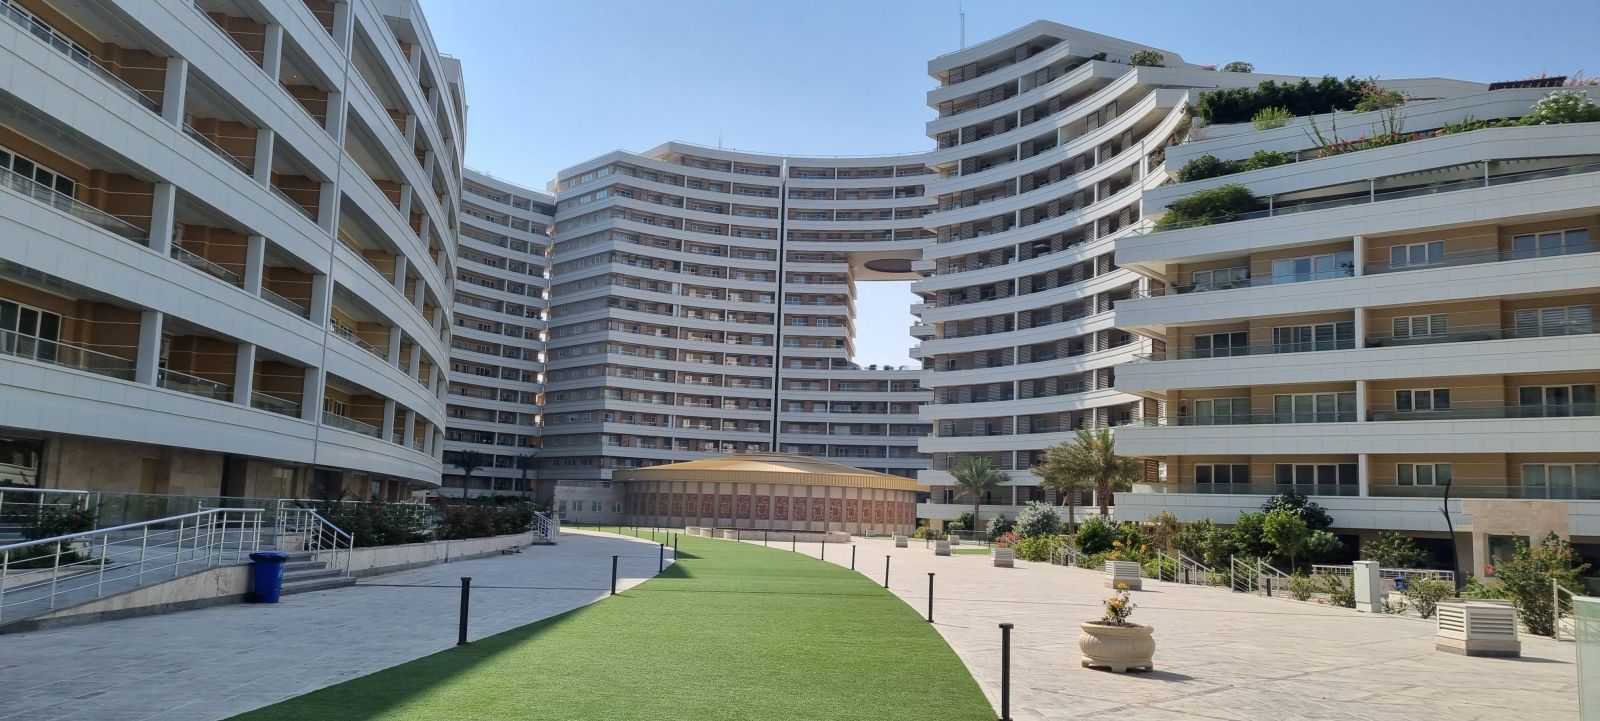 KARANEH KISH Residential Complex